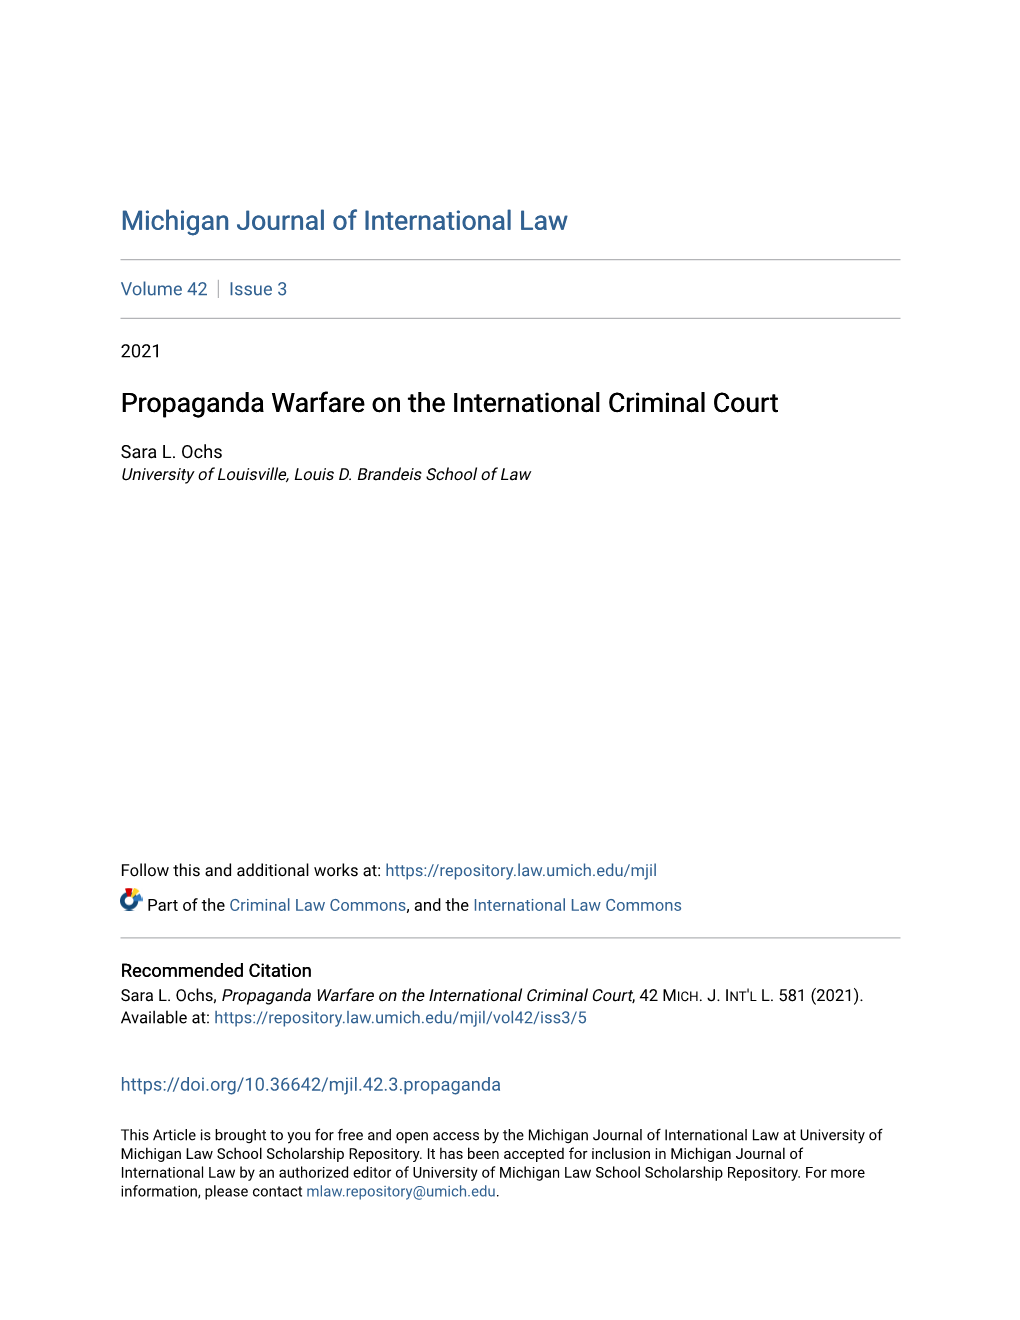 Propaganda Warfare on the International Criminal Court